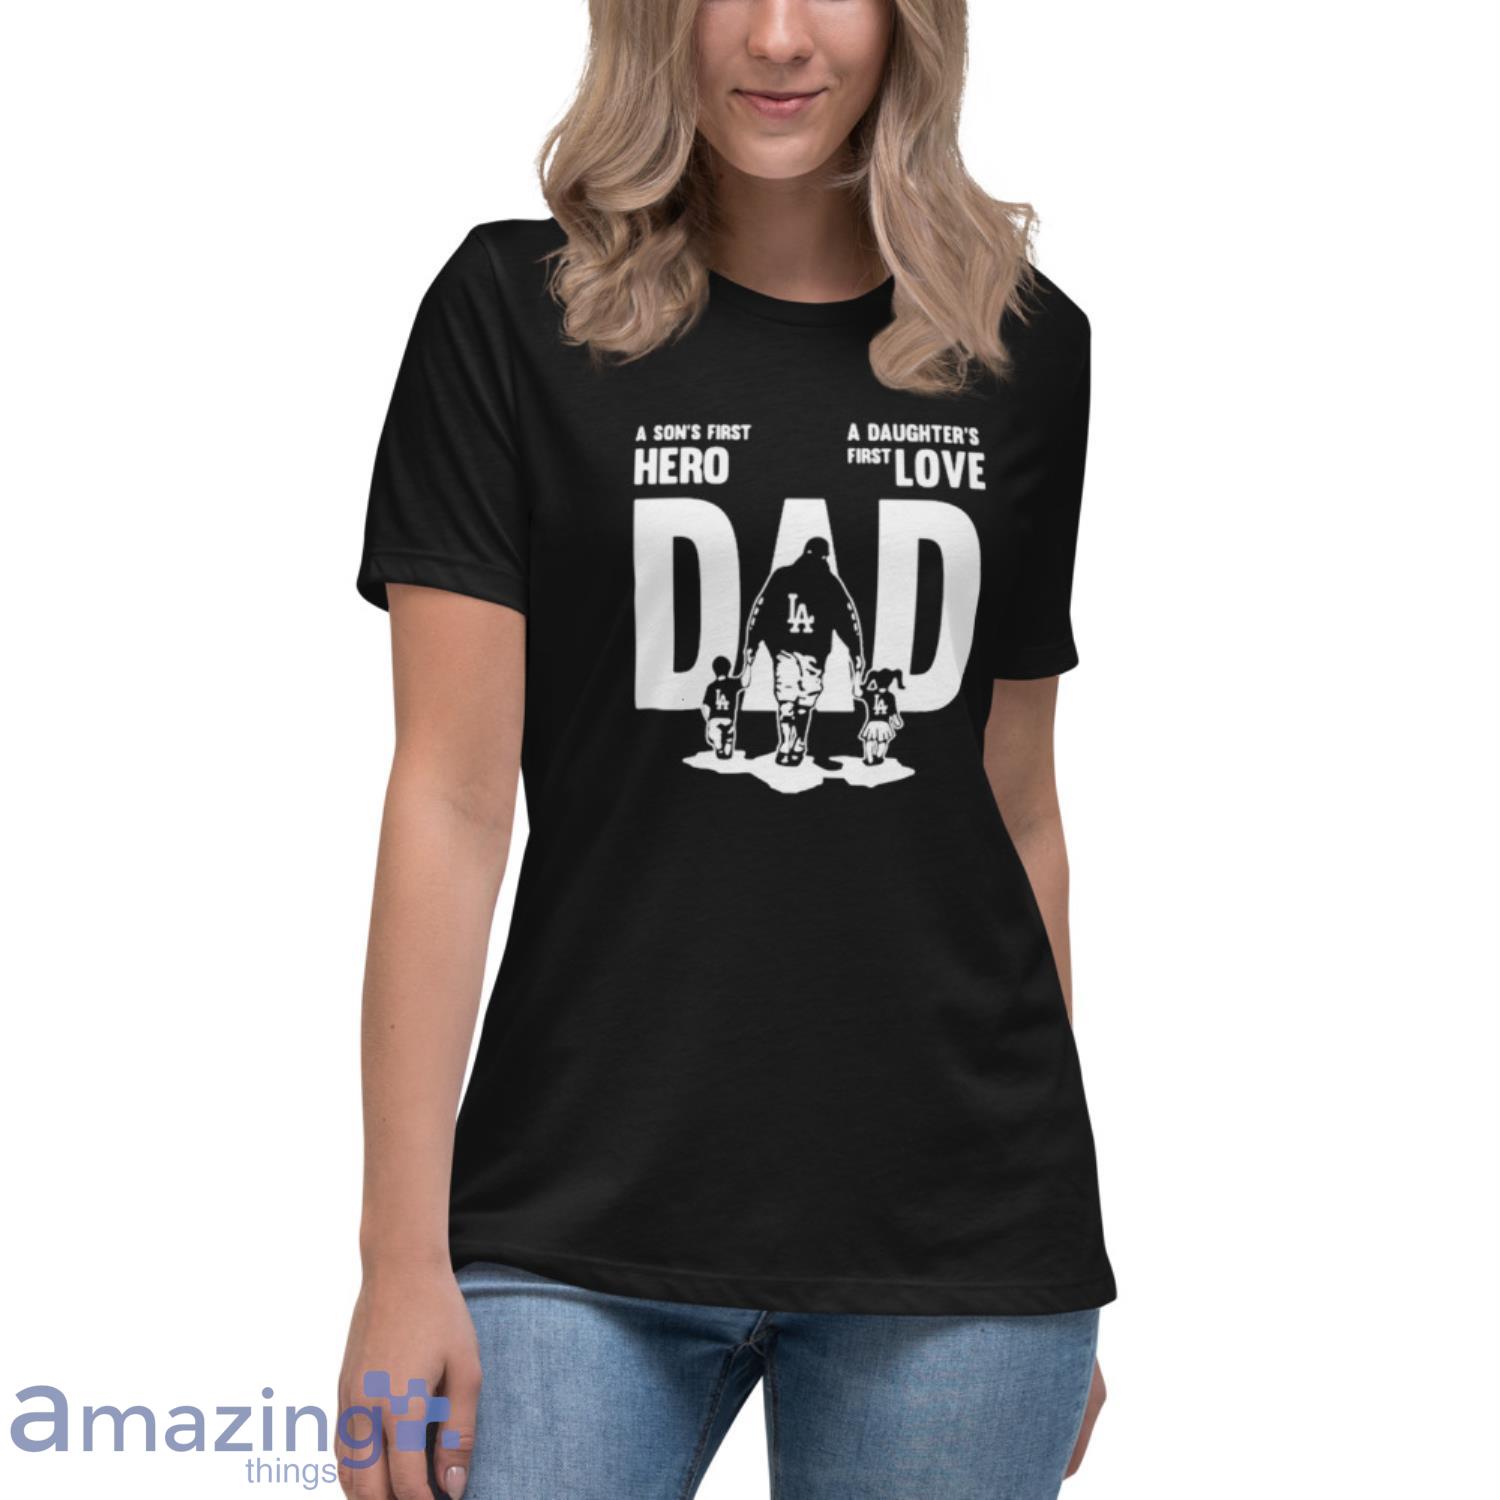 dad dodgers shirt